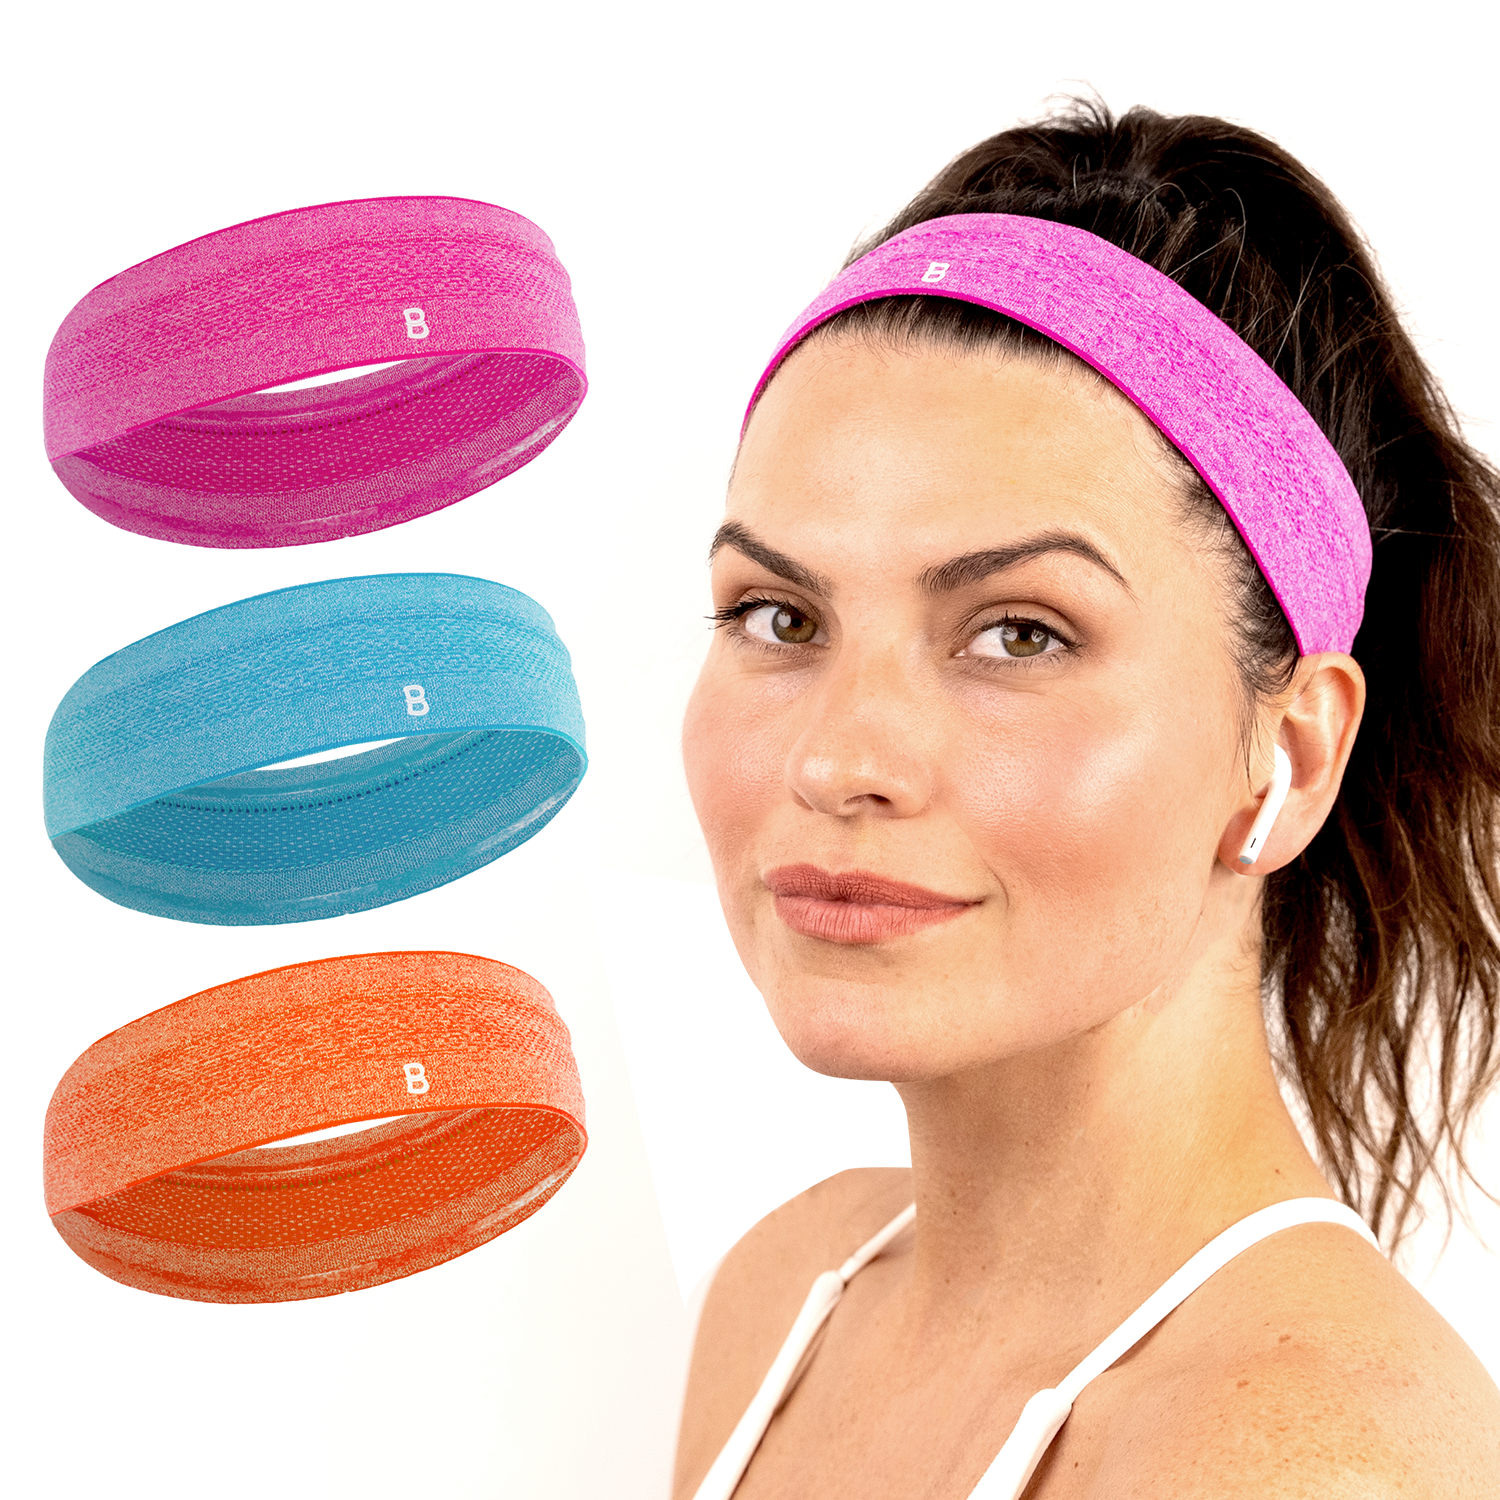 Duufin 20 Pieces Elastic Sport Headbands Non-Slip Workout Headband